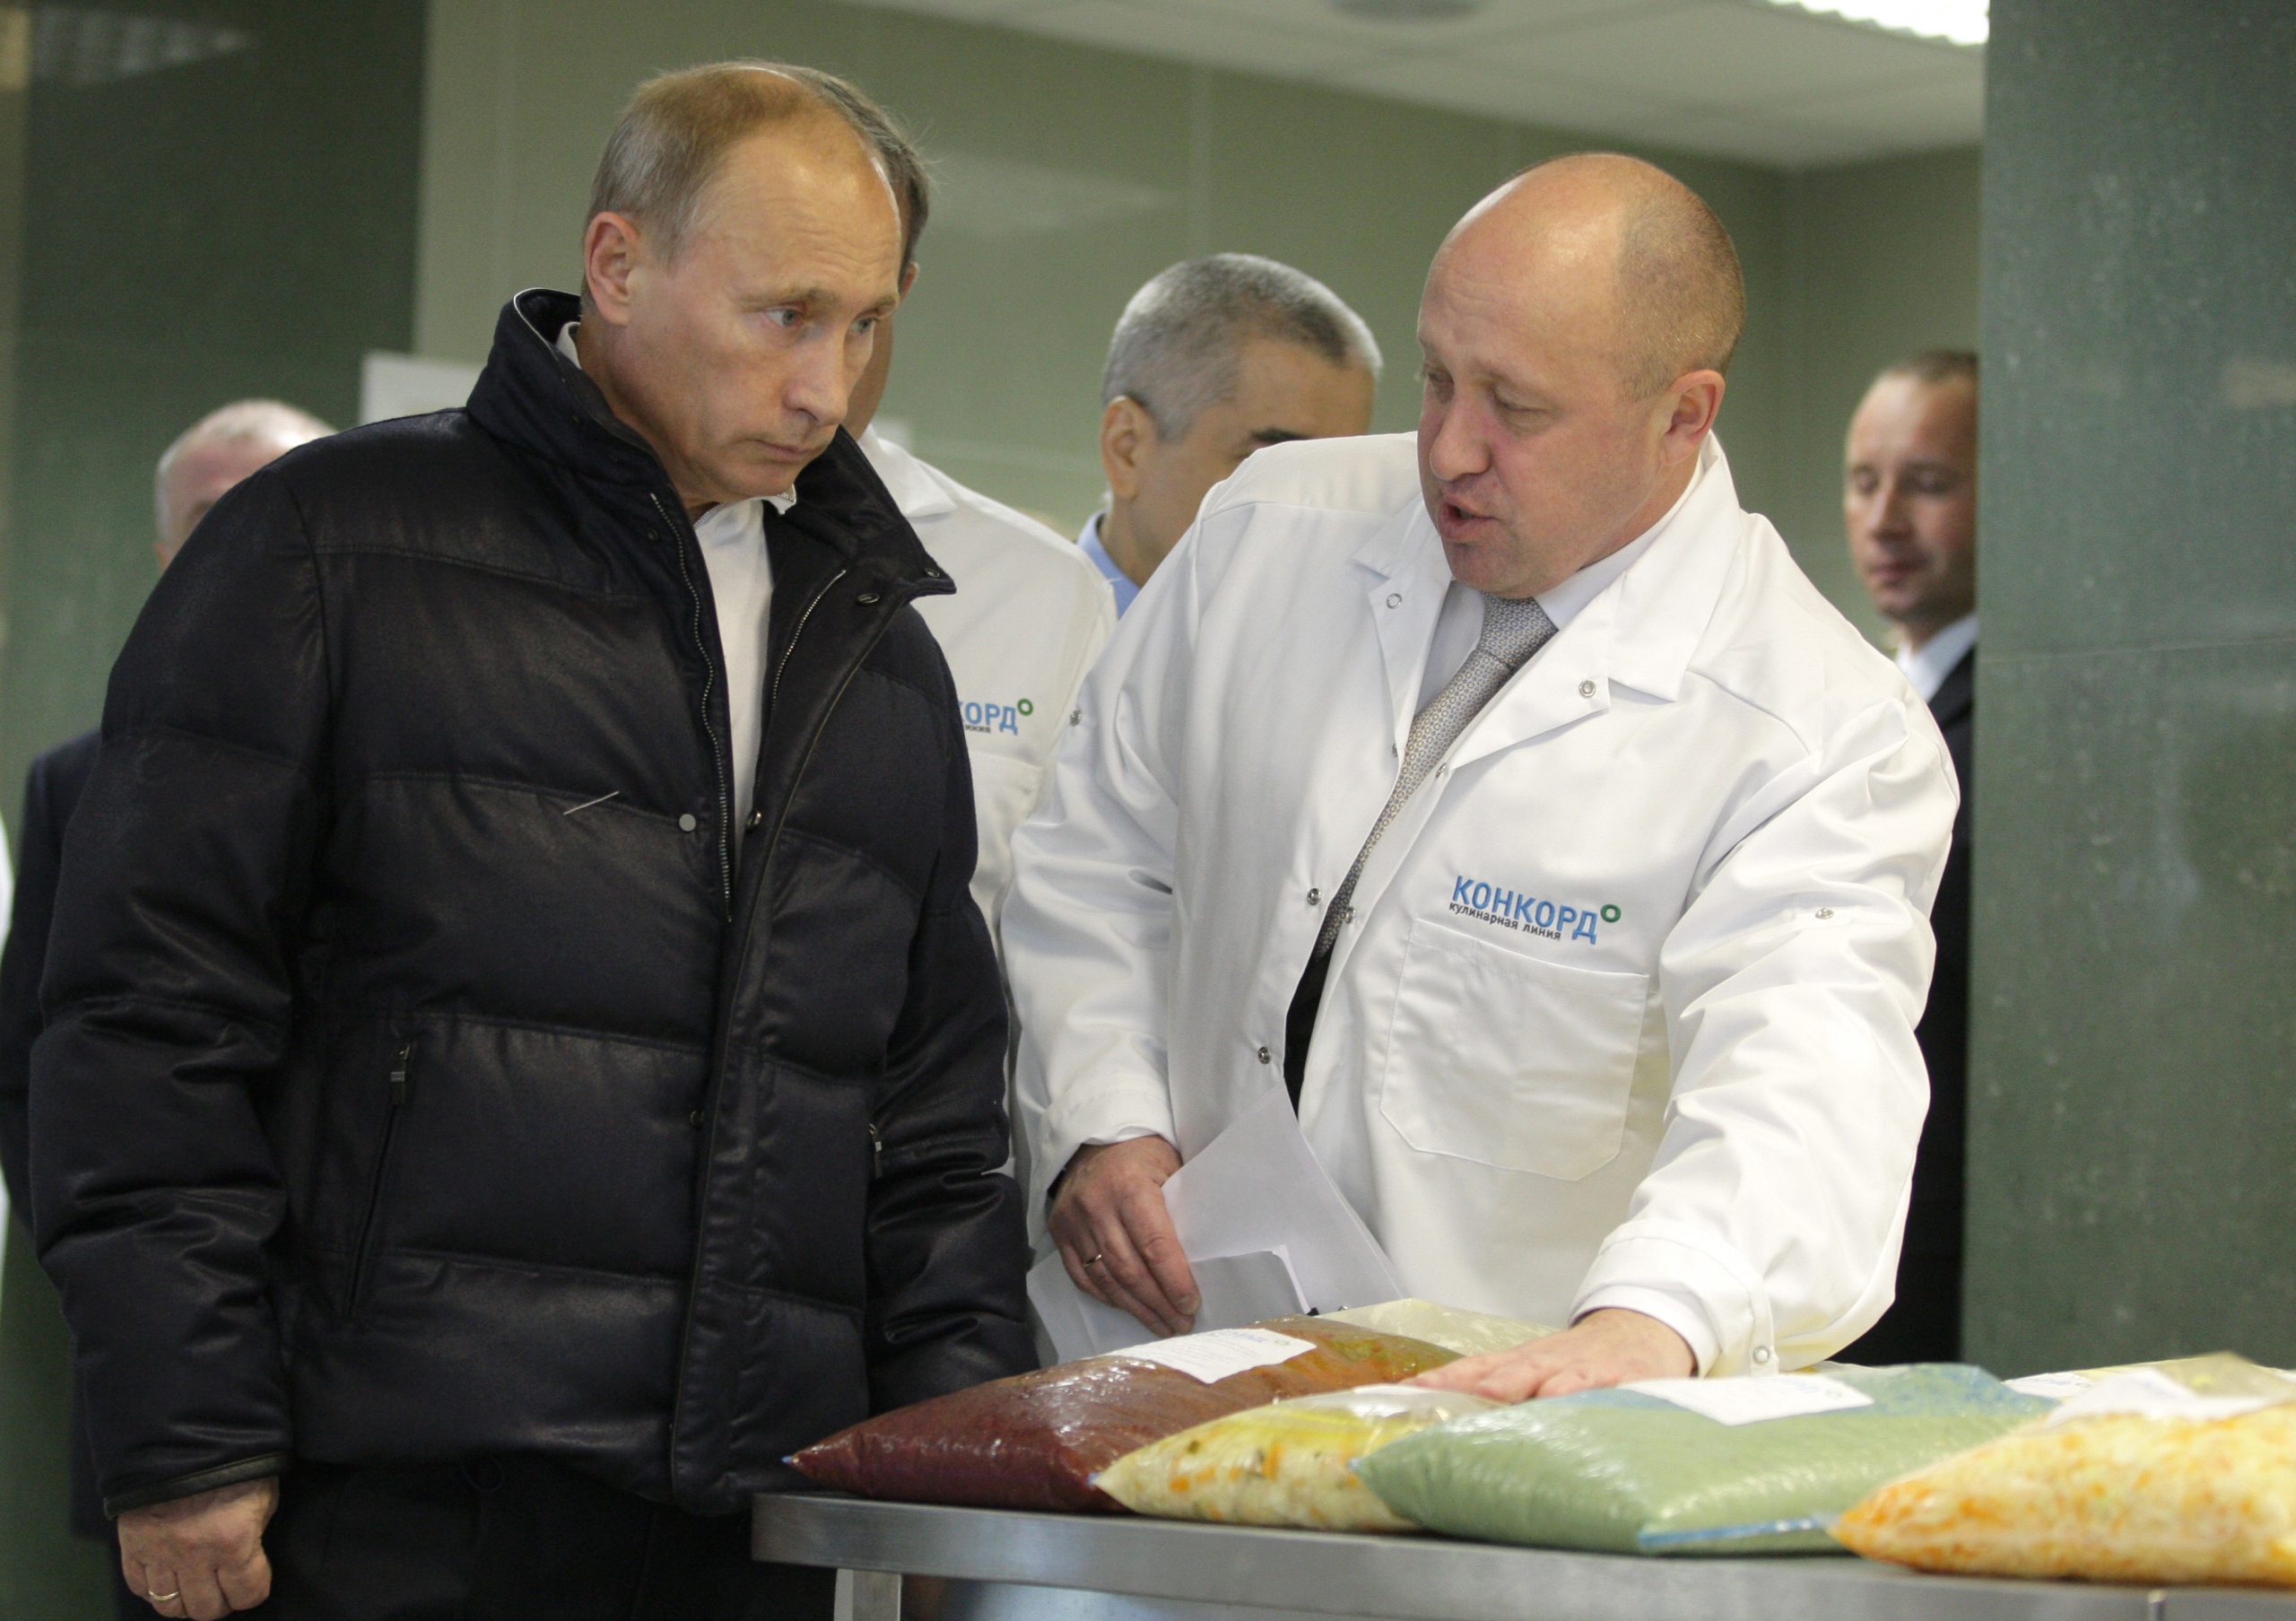 Bild: Government of the Russian Federation, Vladimir Putin tours Yevgeny Prigozhin's Concord food catering factory 08, CC BY 3.0, via Wikimedia Commons, (keine Änderungen vorgenommen)